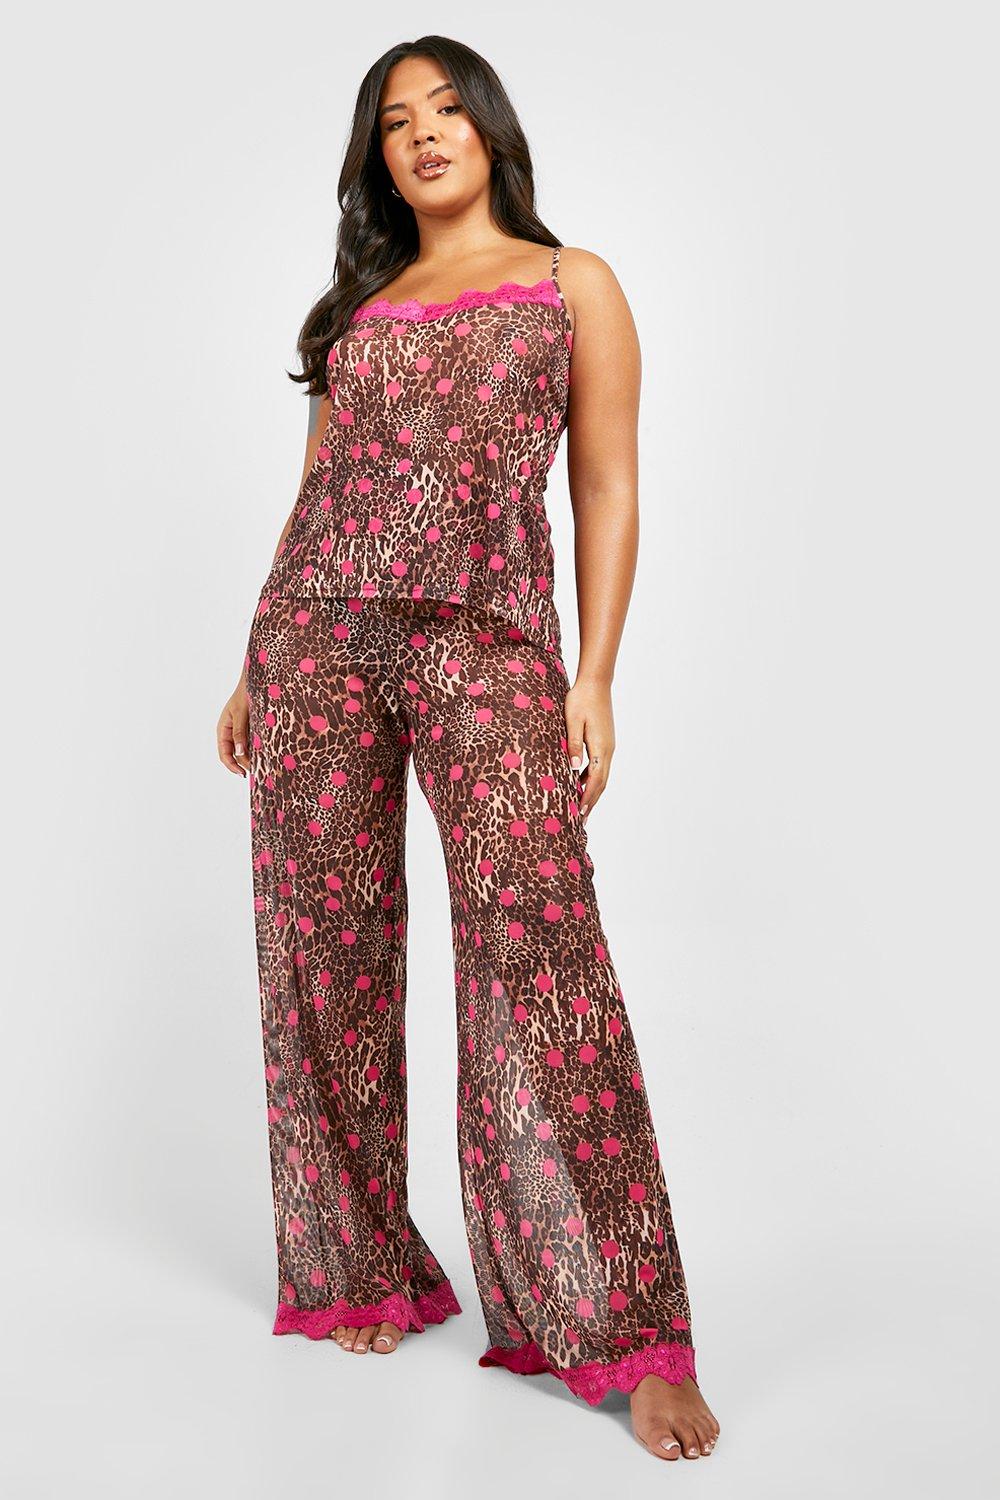 Women's Plus Size Satin Camisole Pajama Set #2067x (1X, Polka Dots